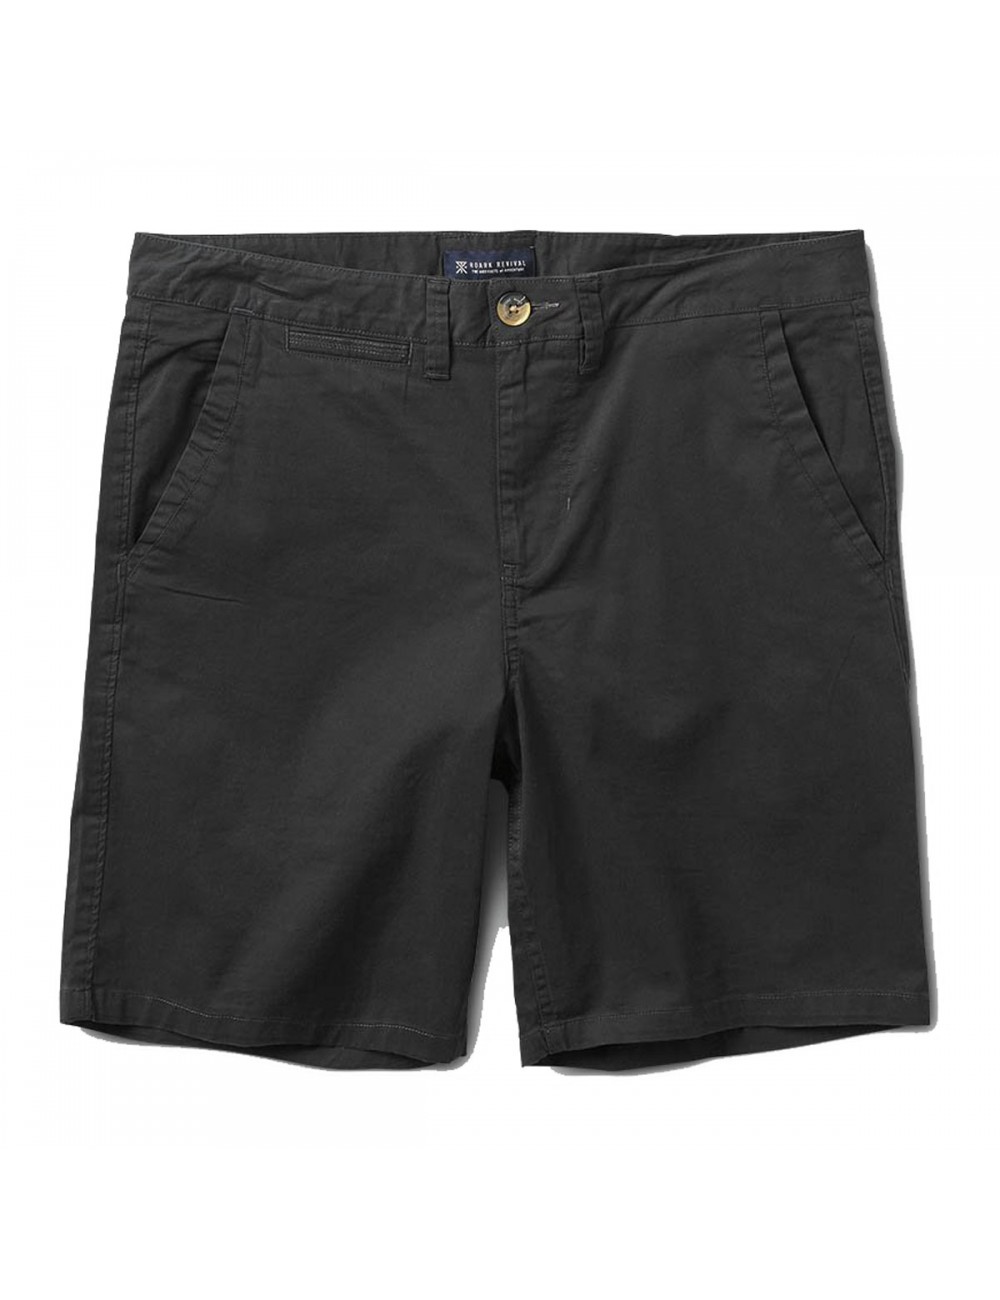 Roark Porter Shorts - Charcoal